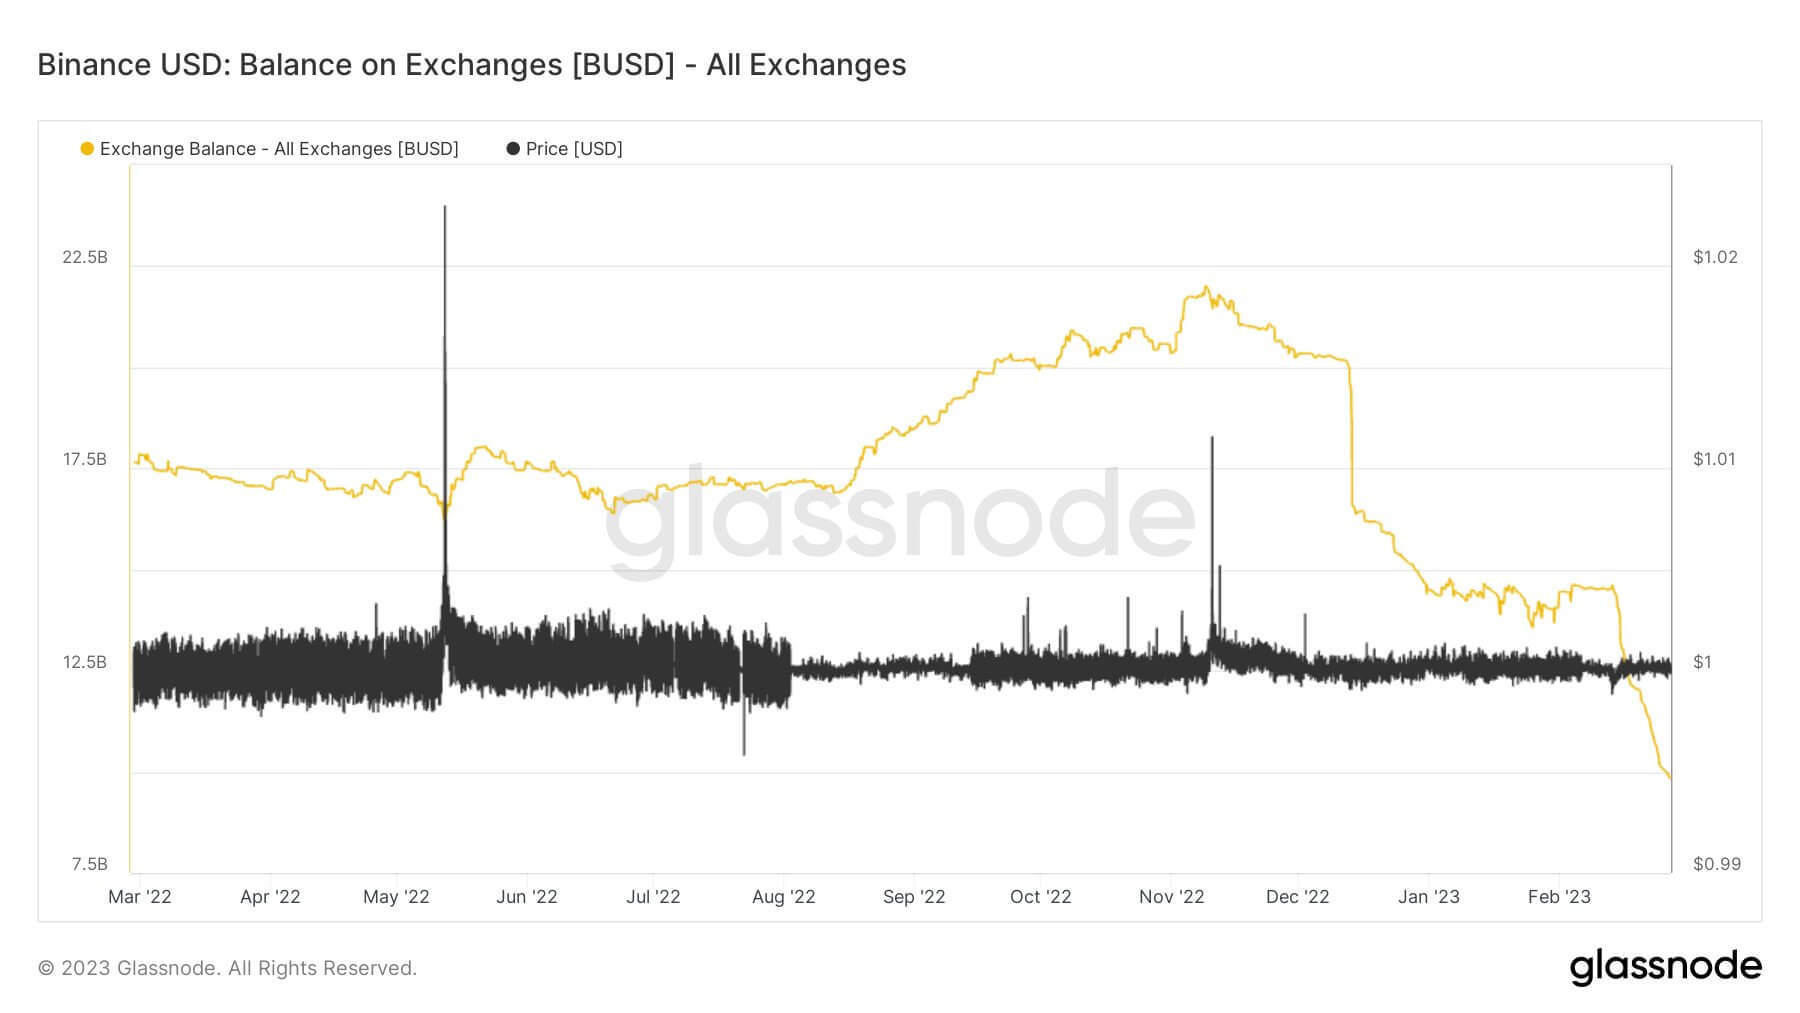 BUSD Balance on exchange: (Source: Glassnode)